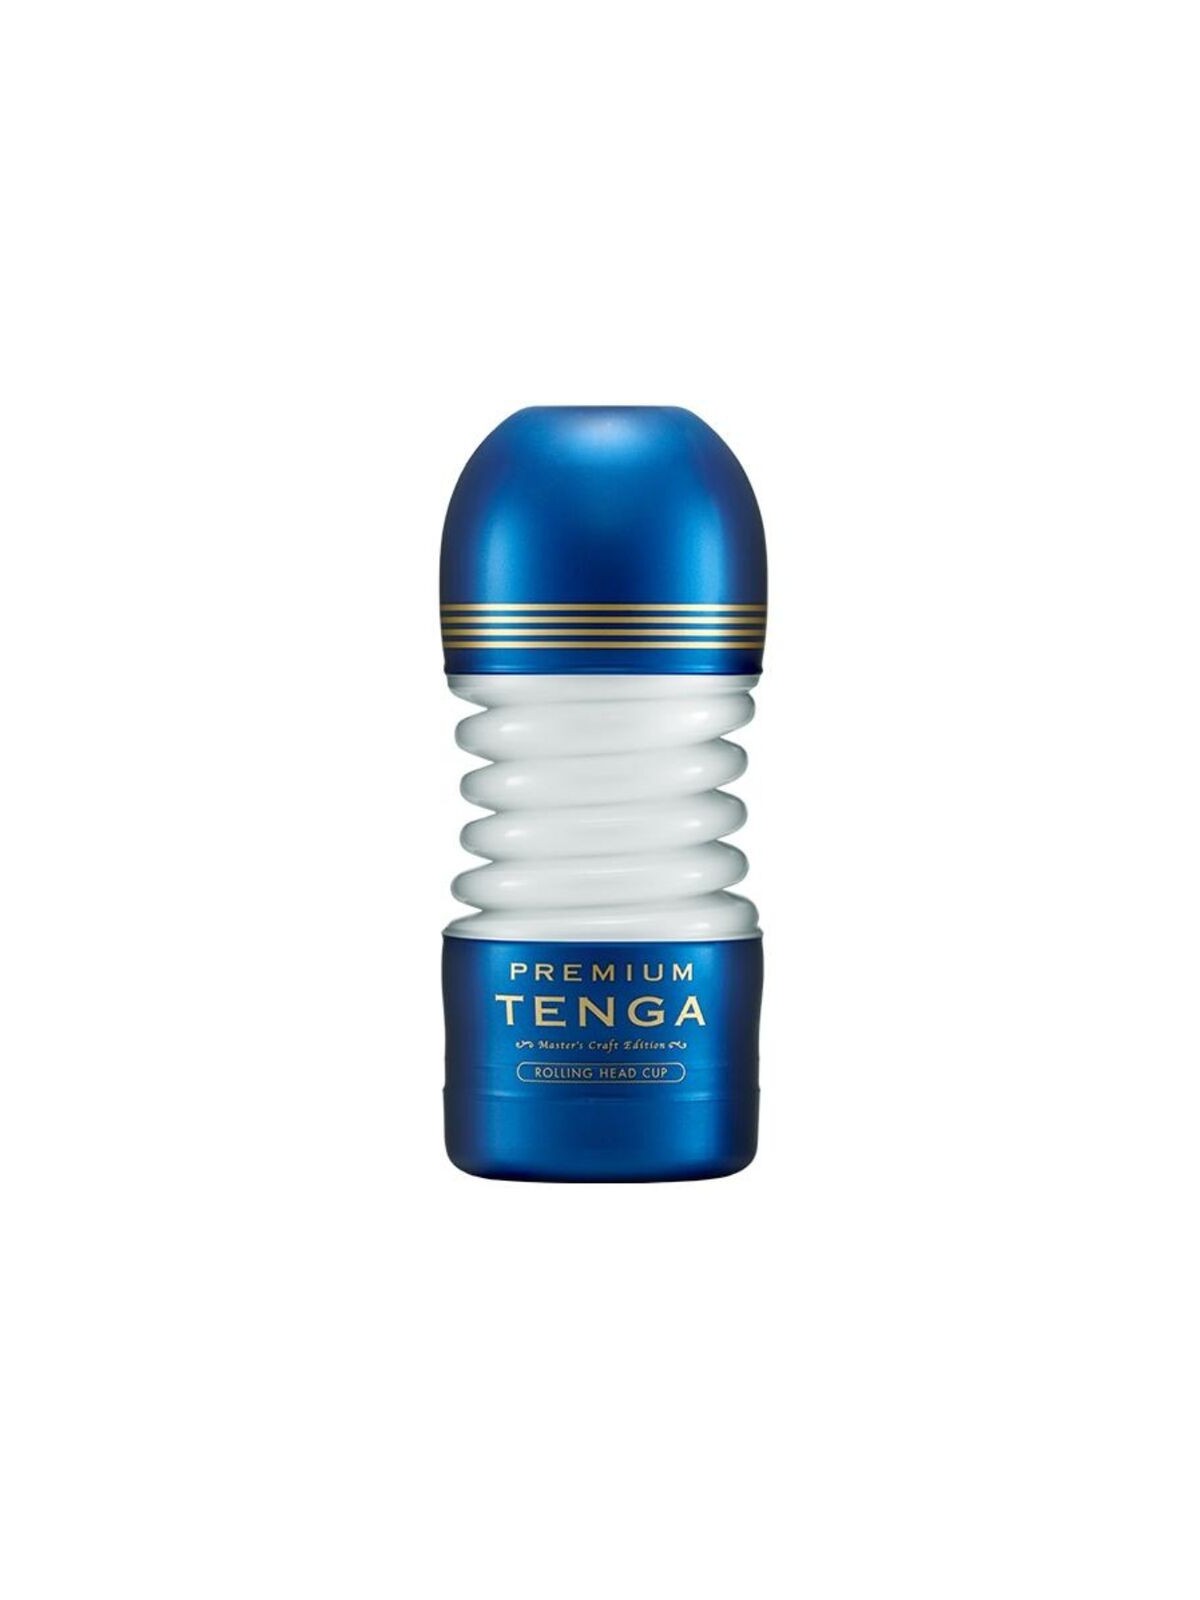 Tenga Premium Rolling Head Cup - Comprar Masturbador en lata Tenga - Vaginas en lata (1)